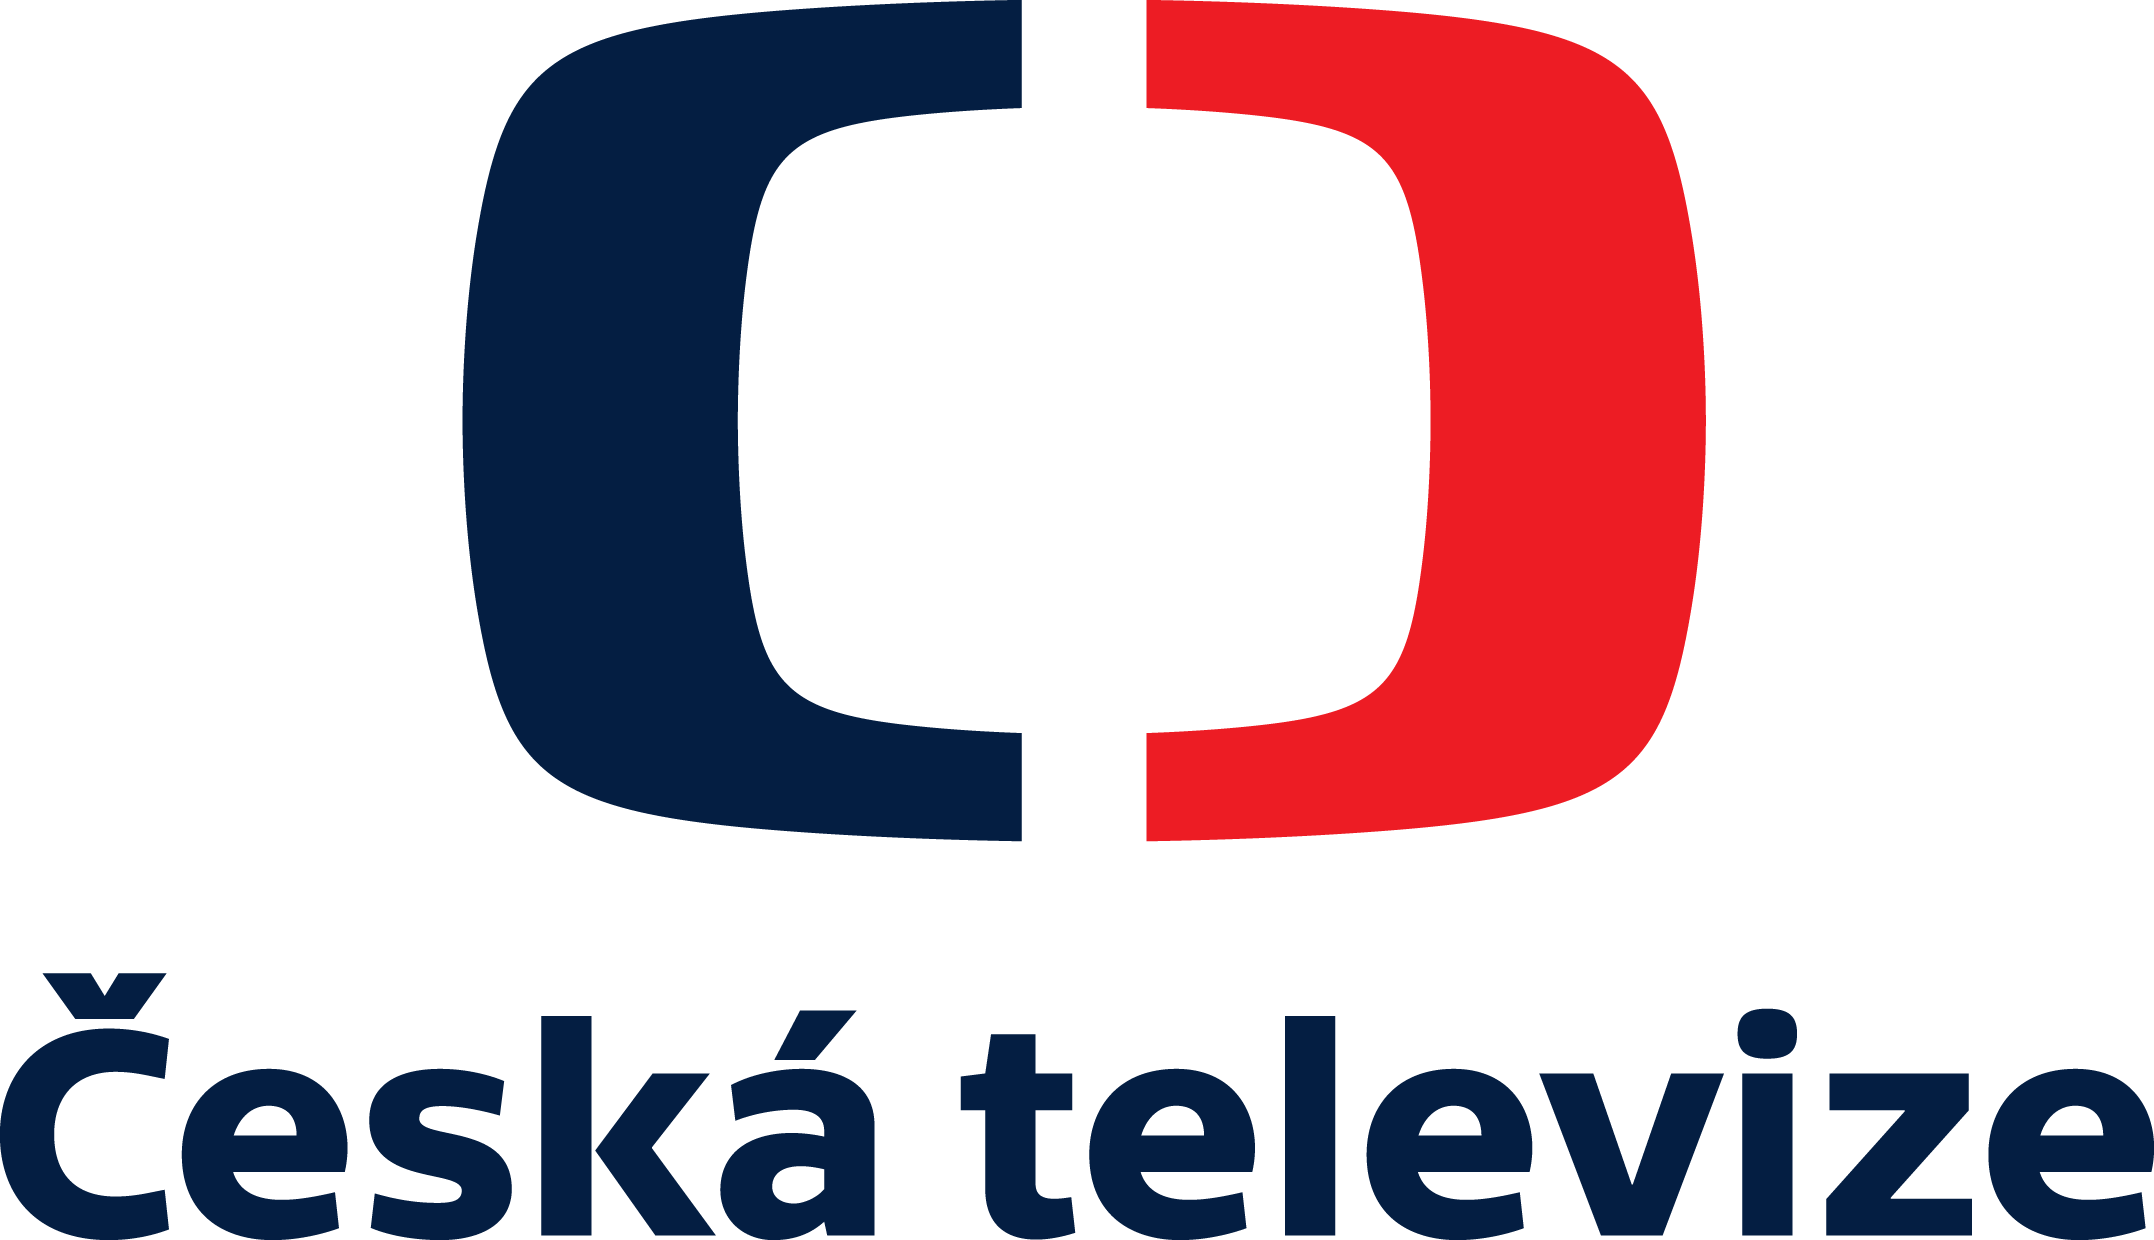 Ceska Televize